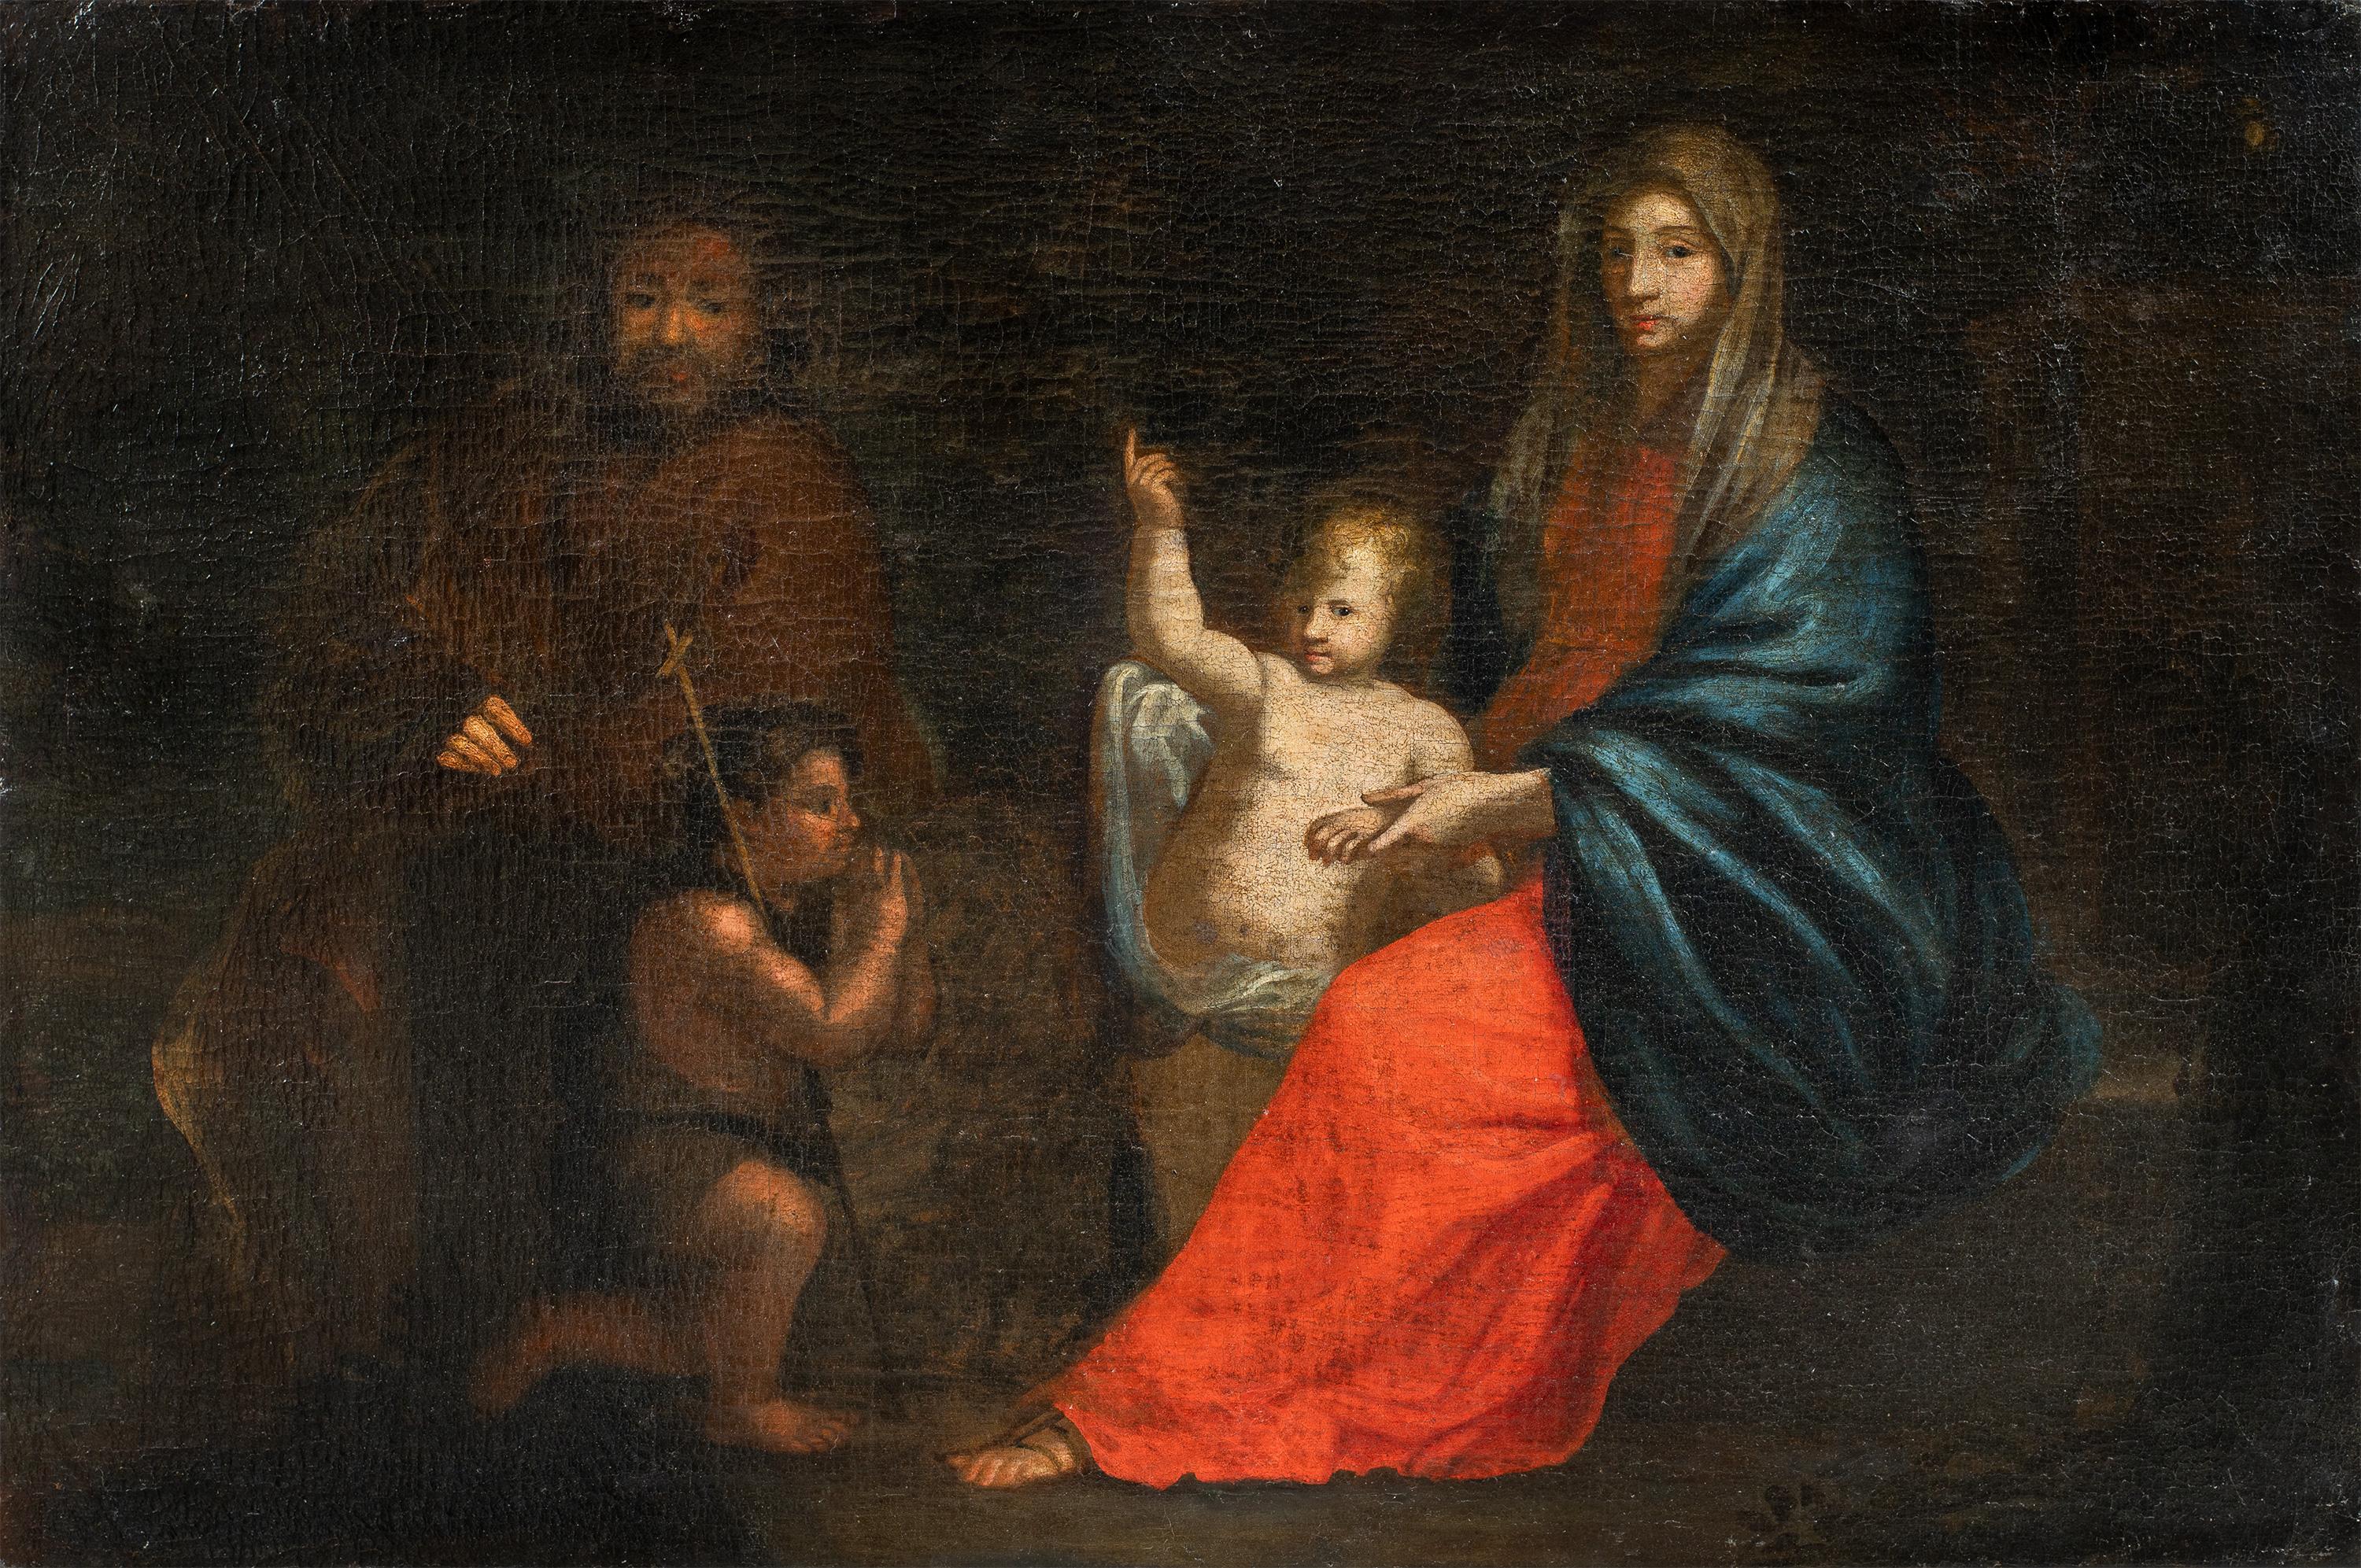 Baroque Italian painter - 17th century figure painting - Holy Family - Virgin